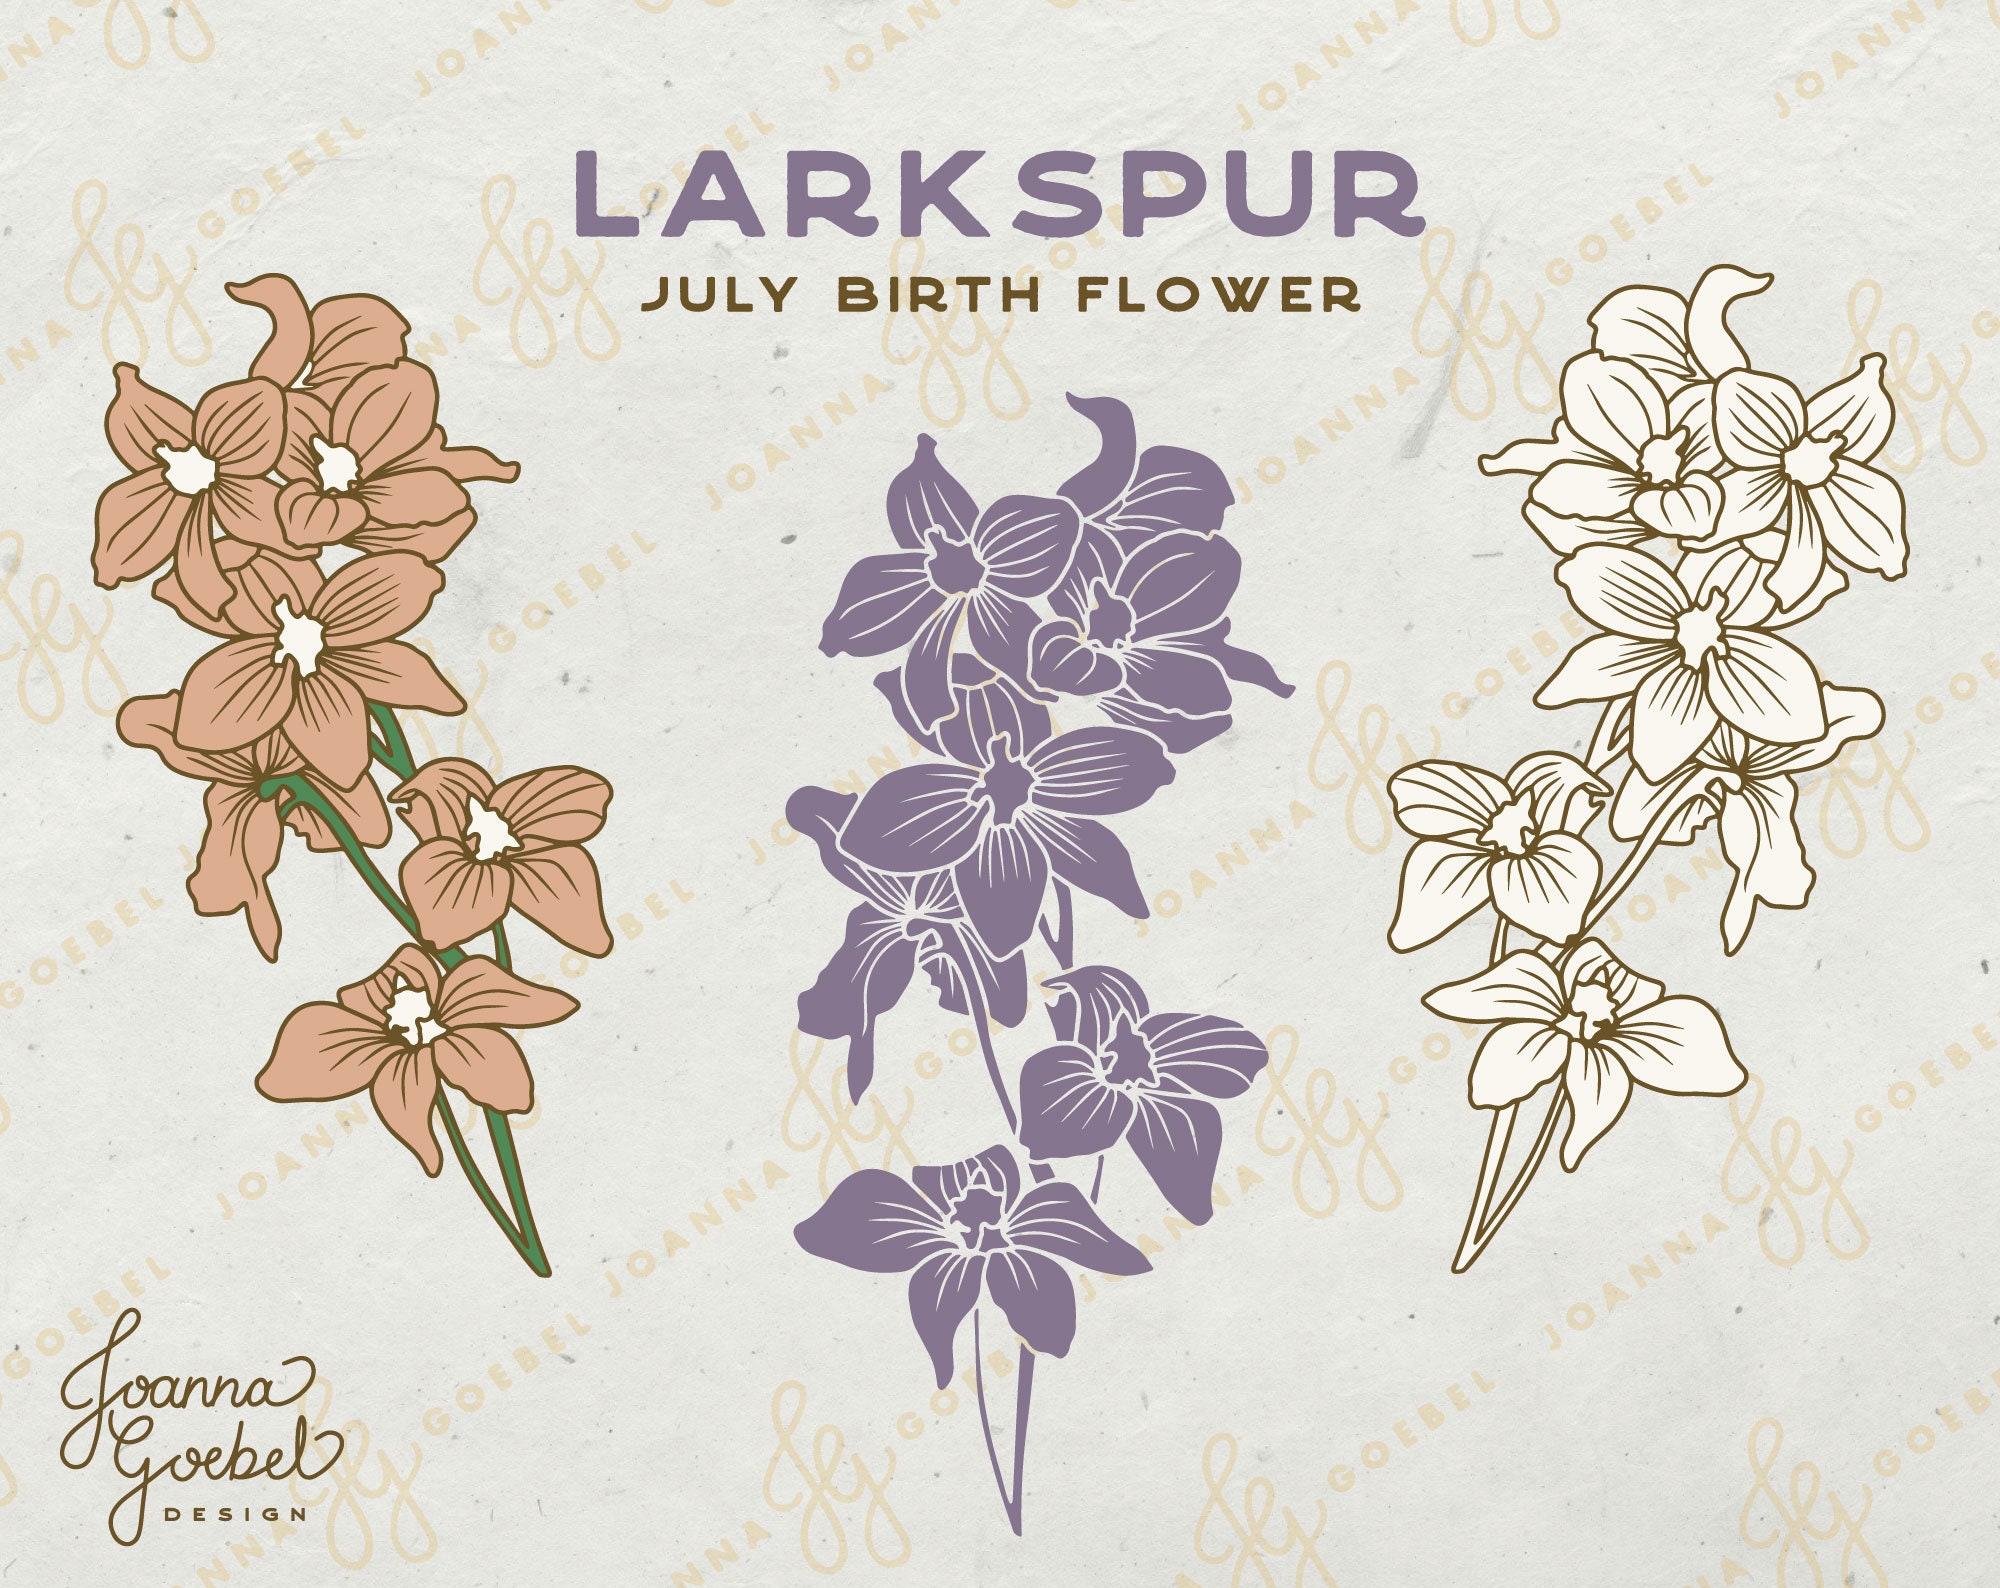 Larkspur Flower Stock Illustrations RoyaltyFree Vector Graphics  Clip  Art  iStock  Larkspur flower on white